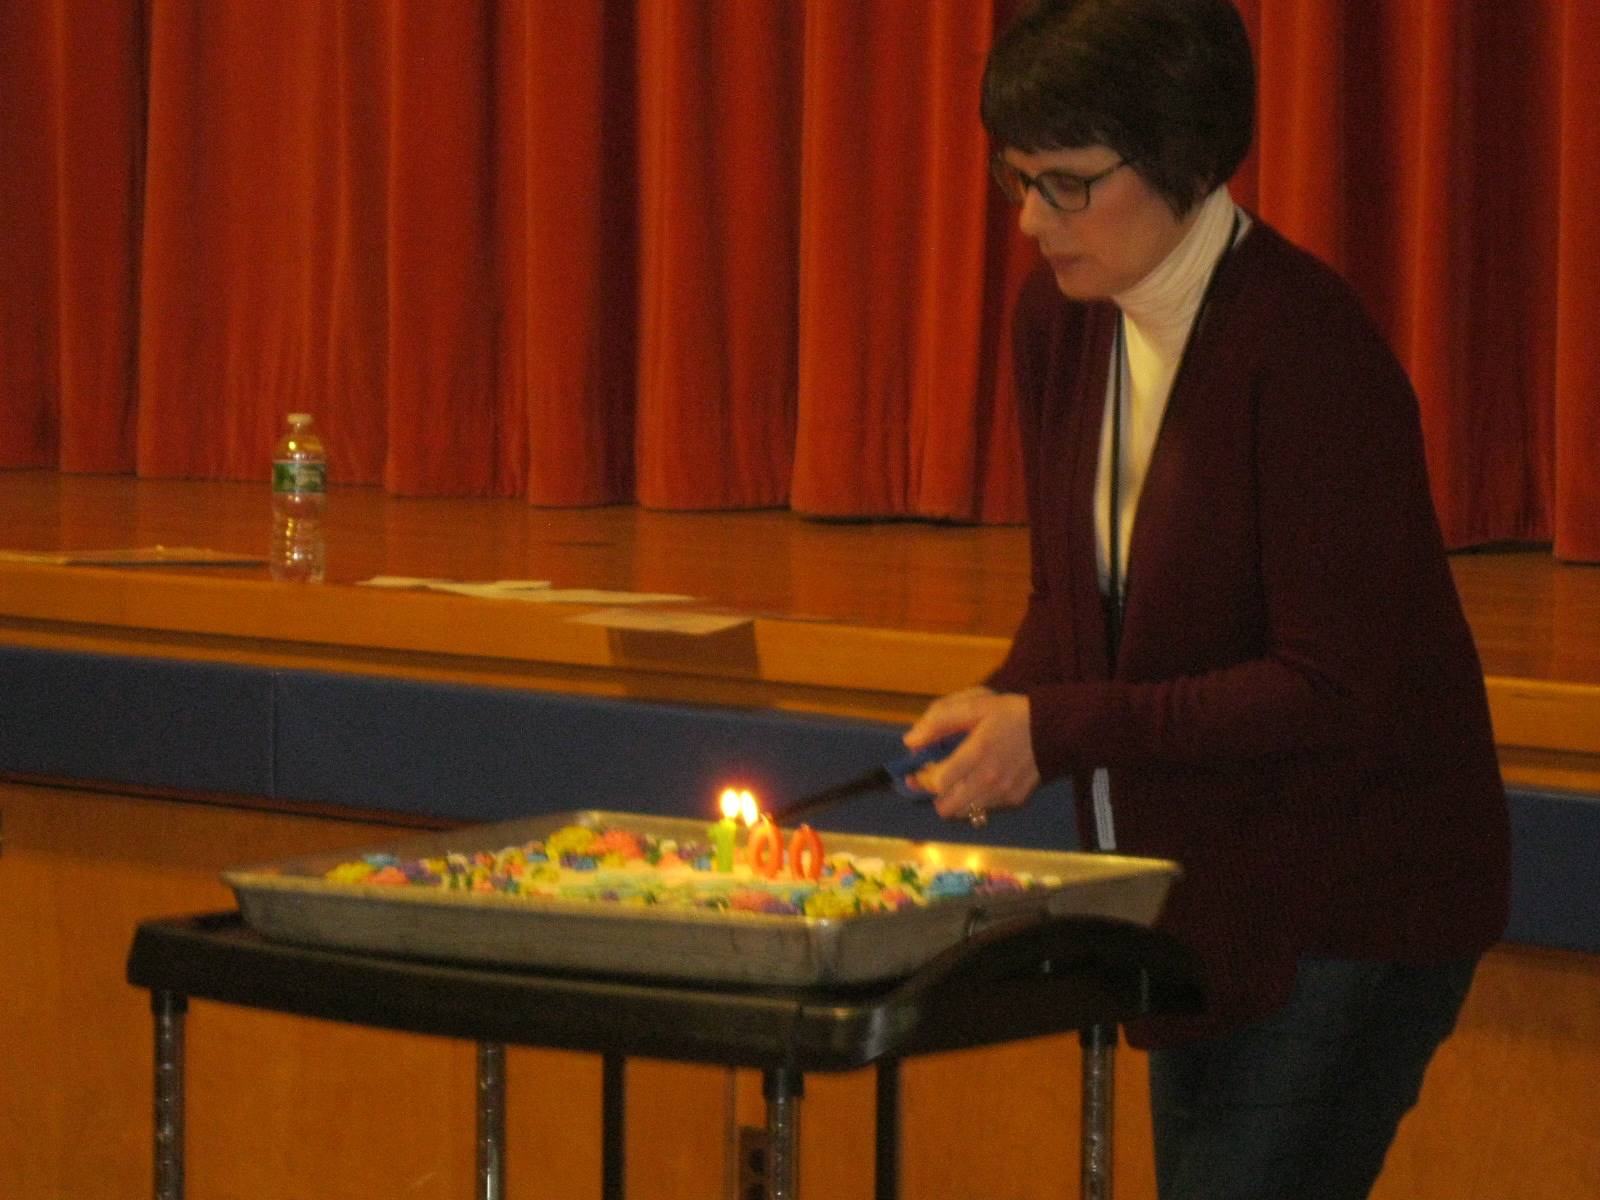 Teacher lights Zero's cake.